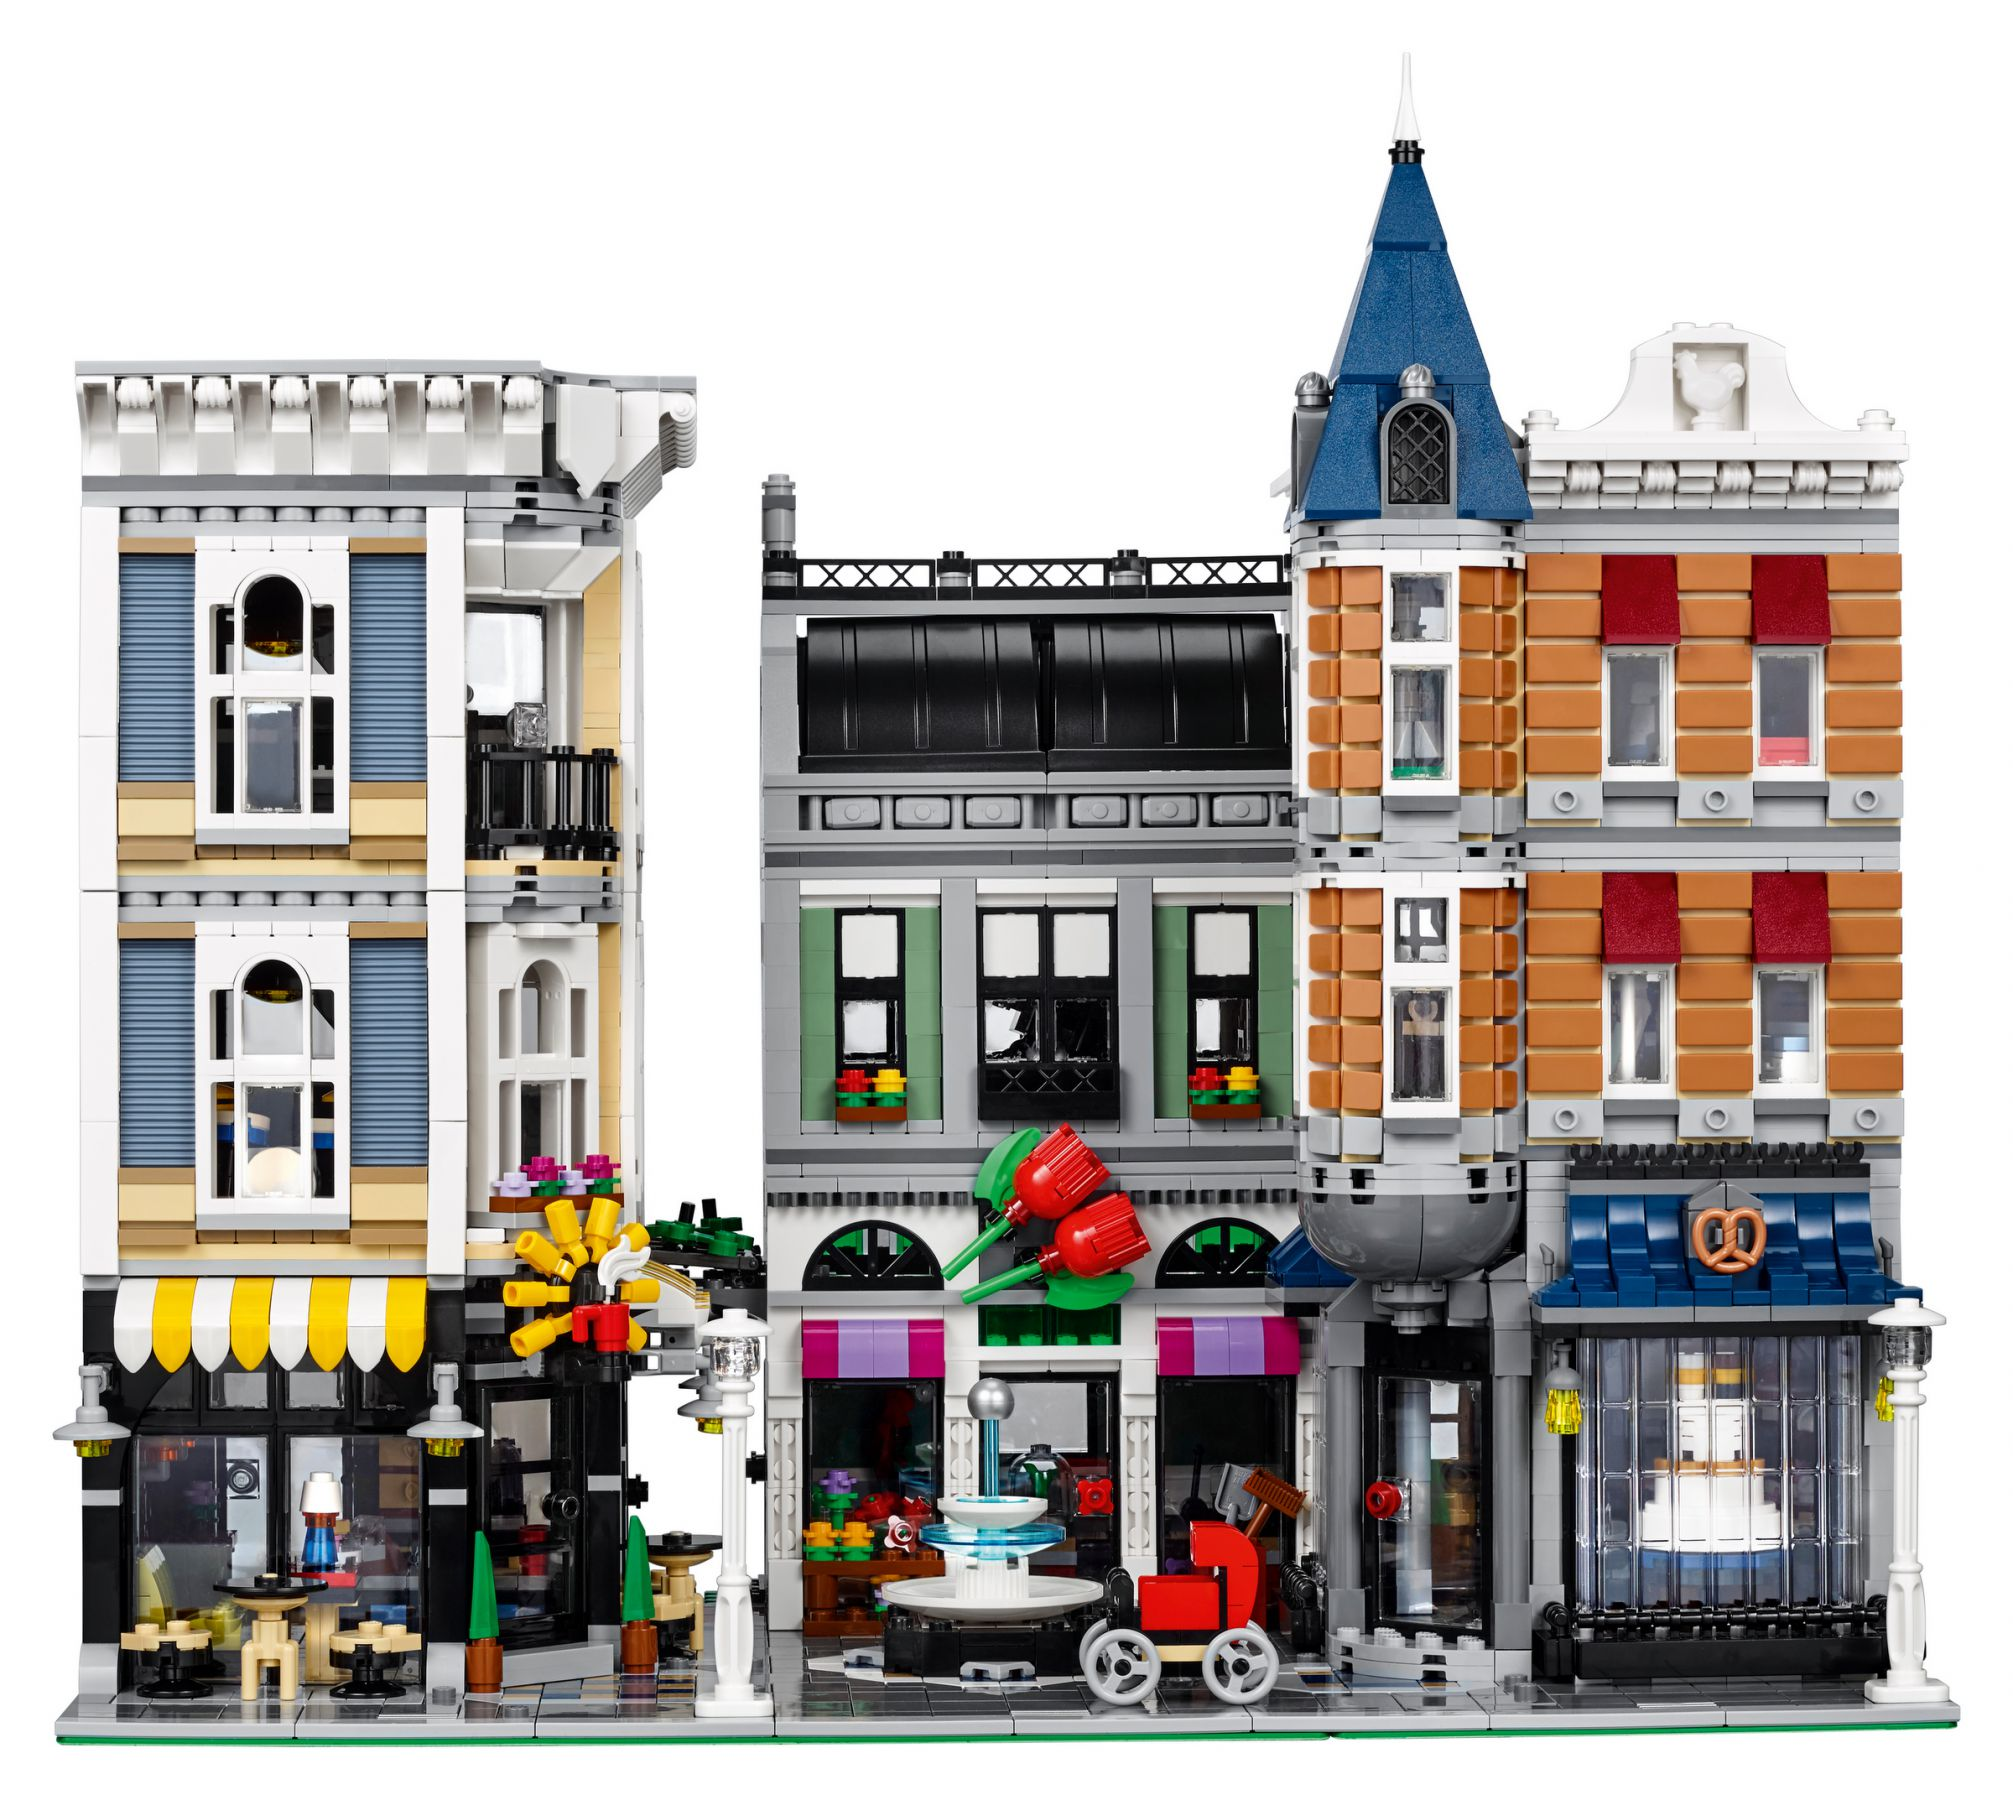 Stadtleben Expert LEGO Bausatz 10255 ® Creator